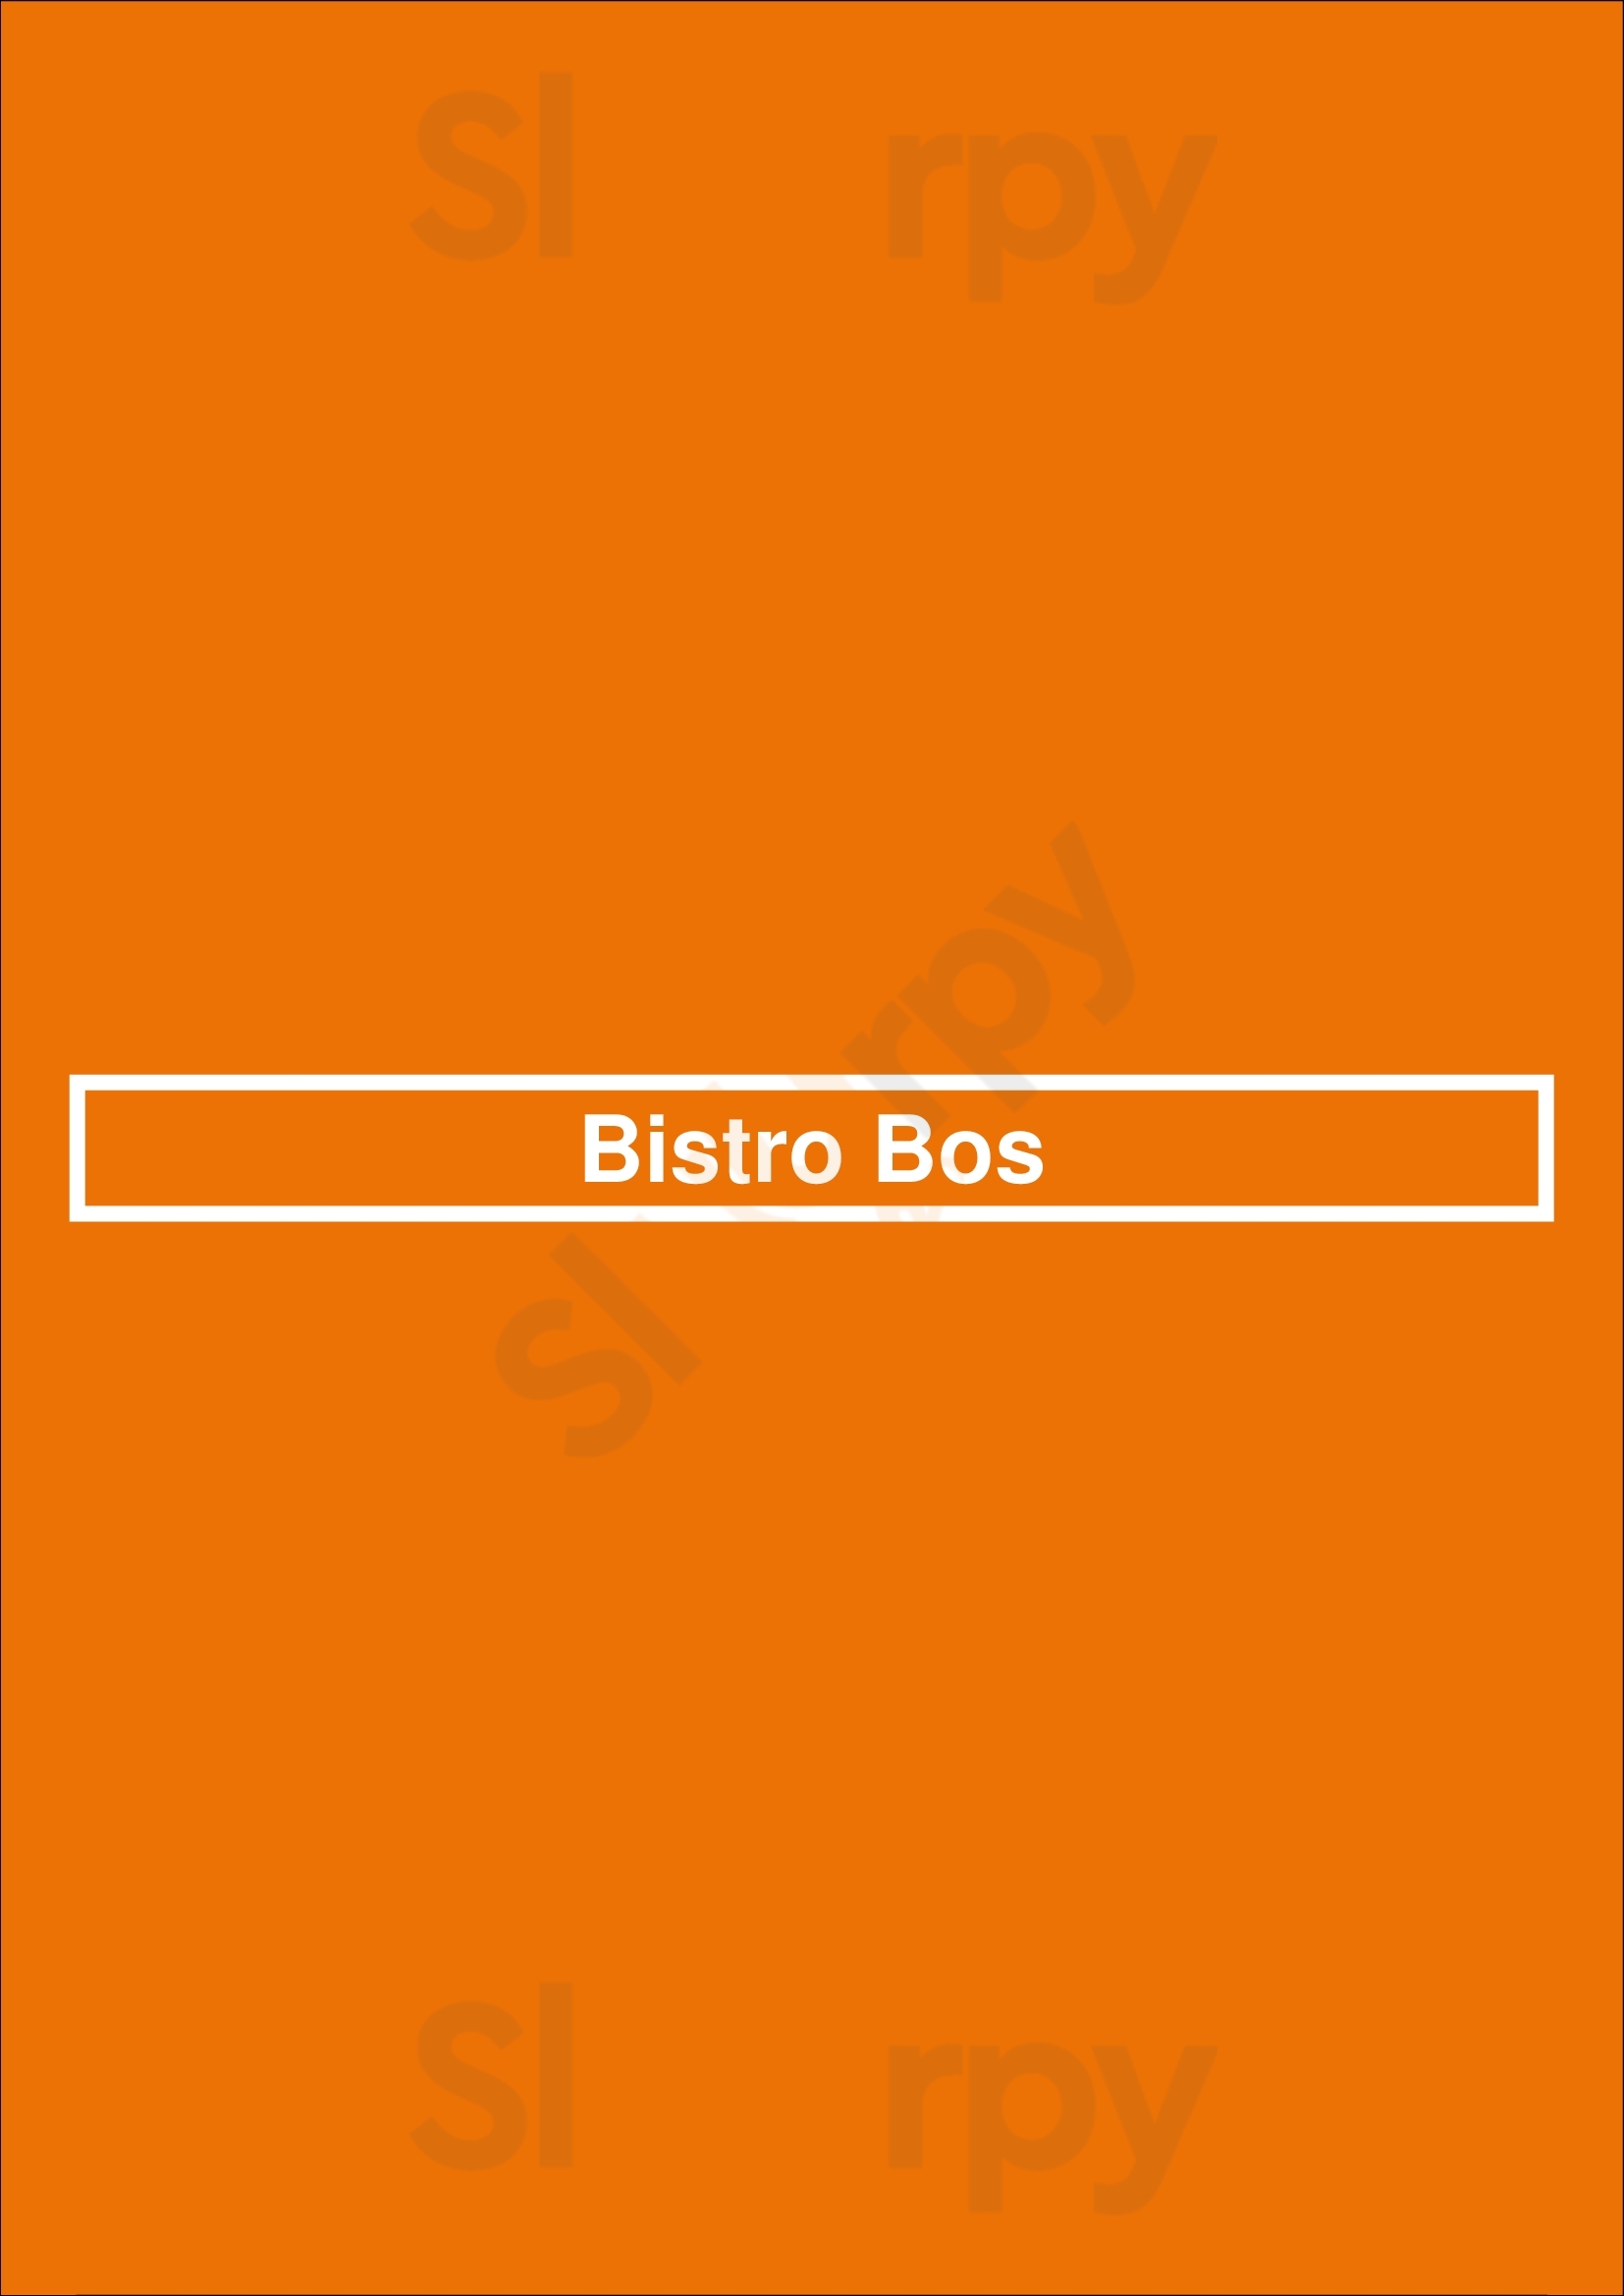 Bistro Bos Amsterdam Menu - 1